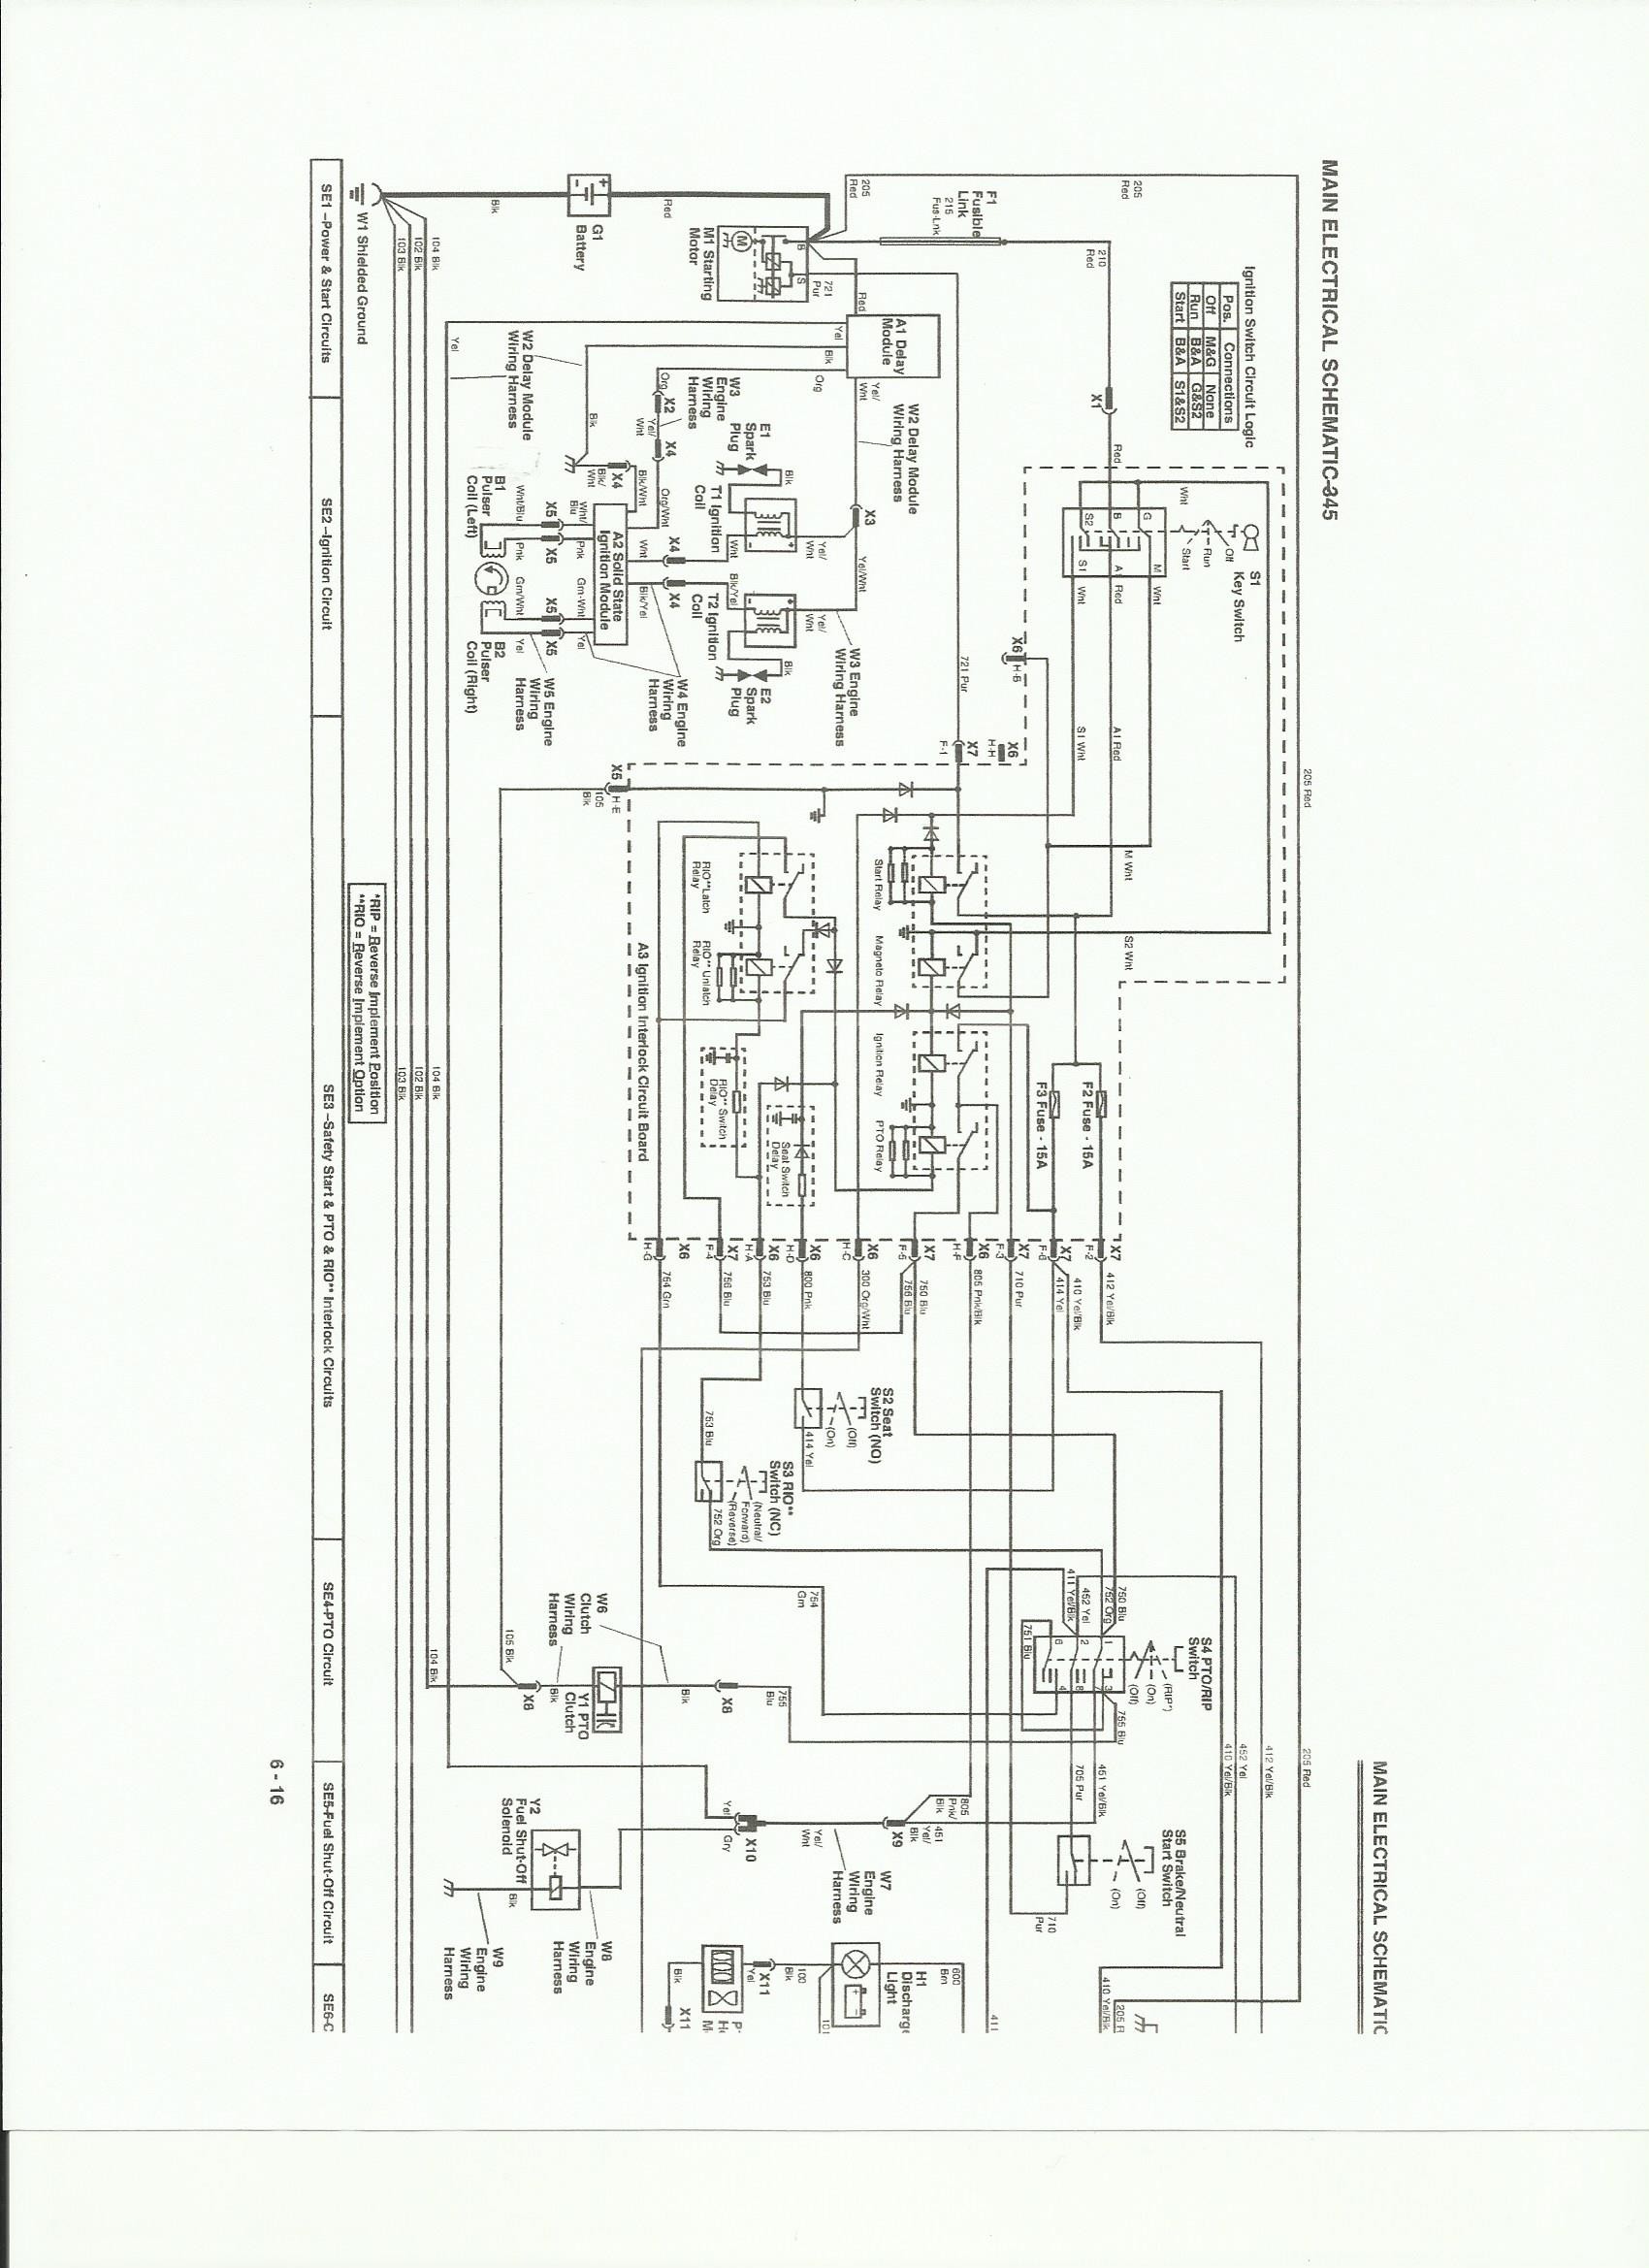 Jd 345 Electrical Diagram John Deere Z425 Wiring Diagram Free Rain Of Jd 345 Electrical Diagram